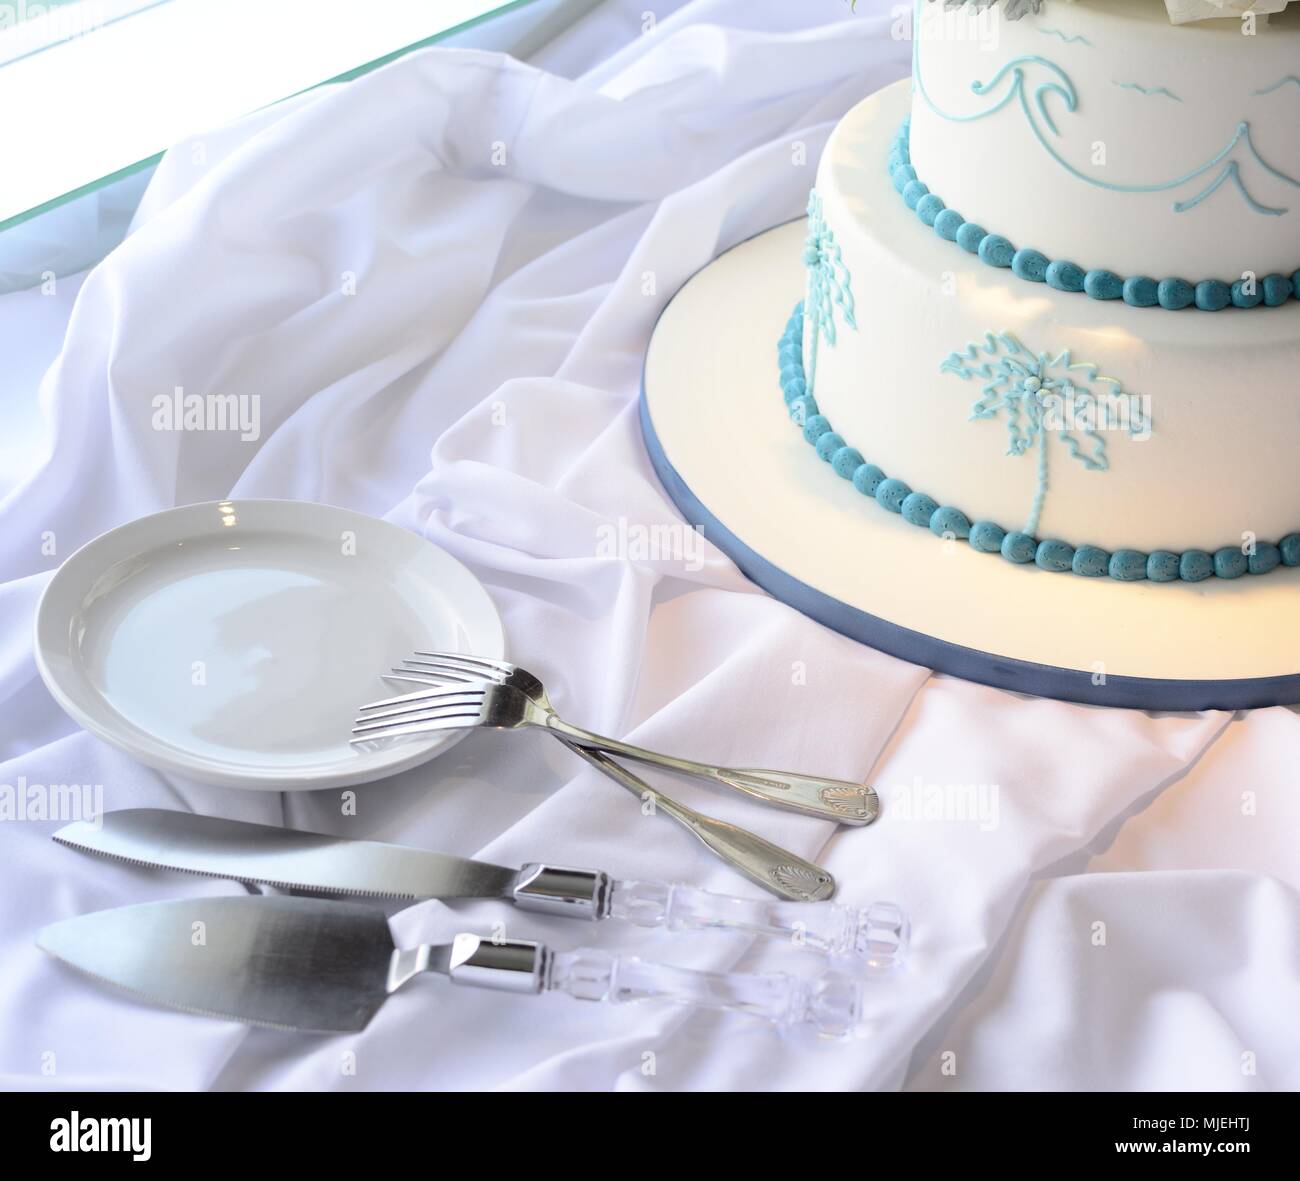 Tropical Themed Wedding Cake Stock Photo